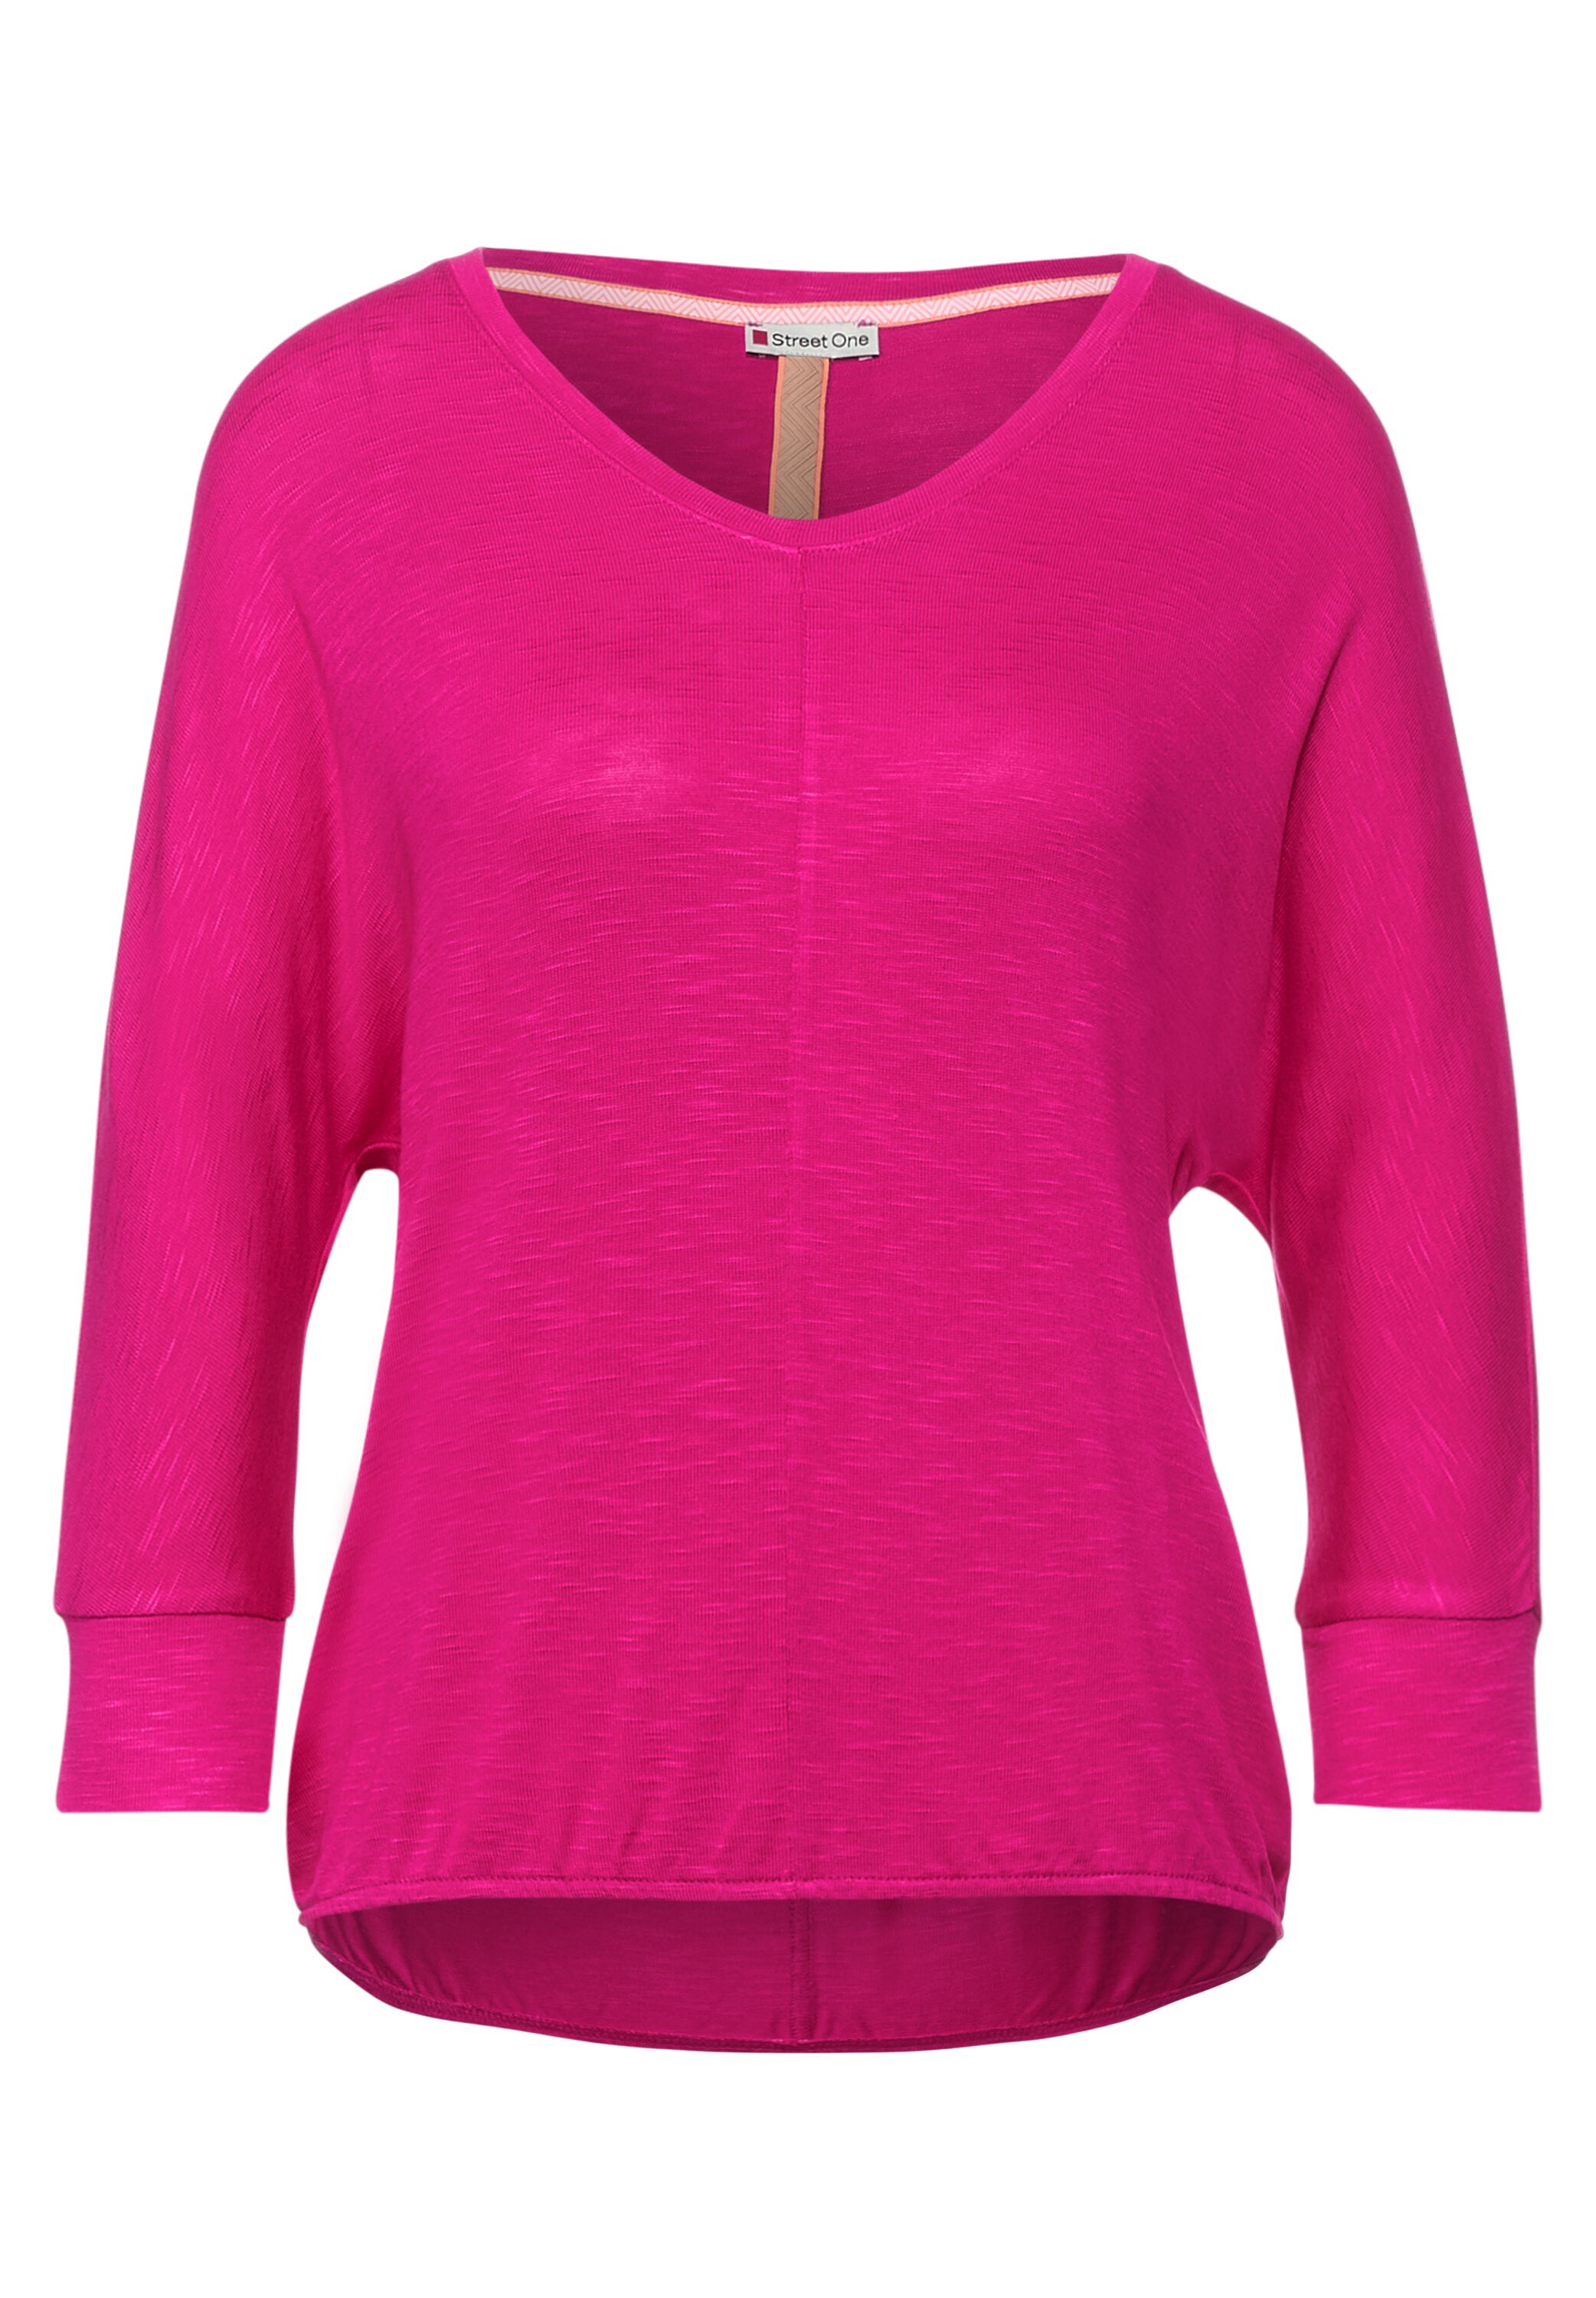 reduziert SALE Pink Mode CONCEPT Ellen Street A317573-13611 One Shirt im in - Powerful